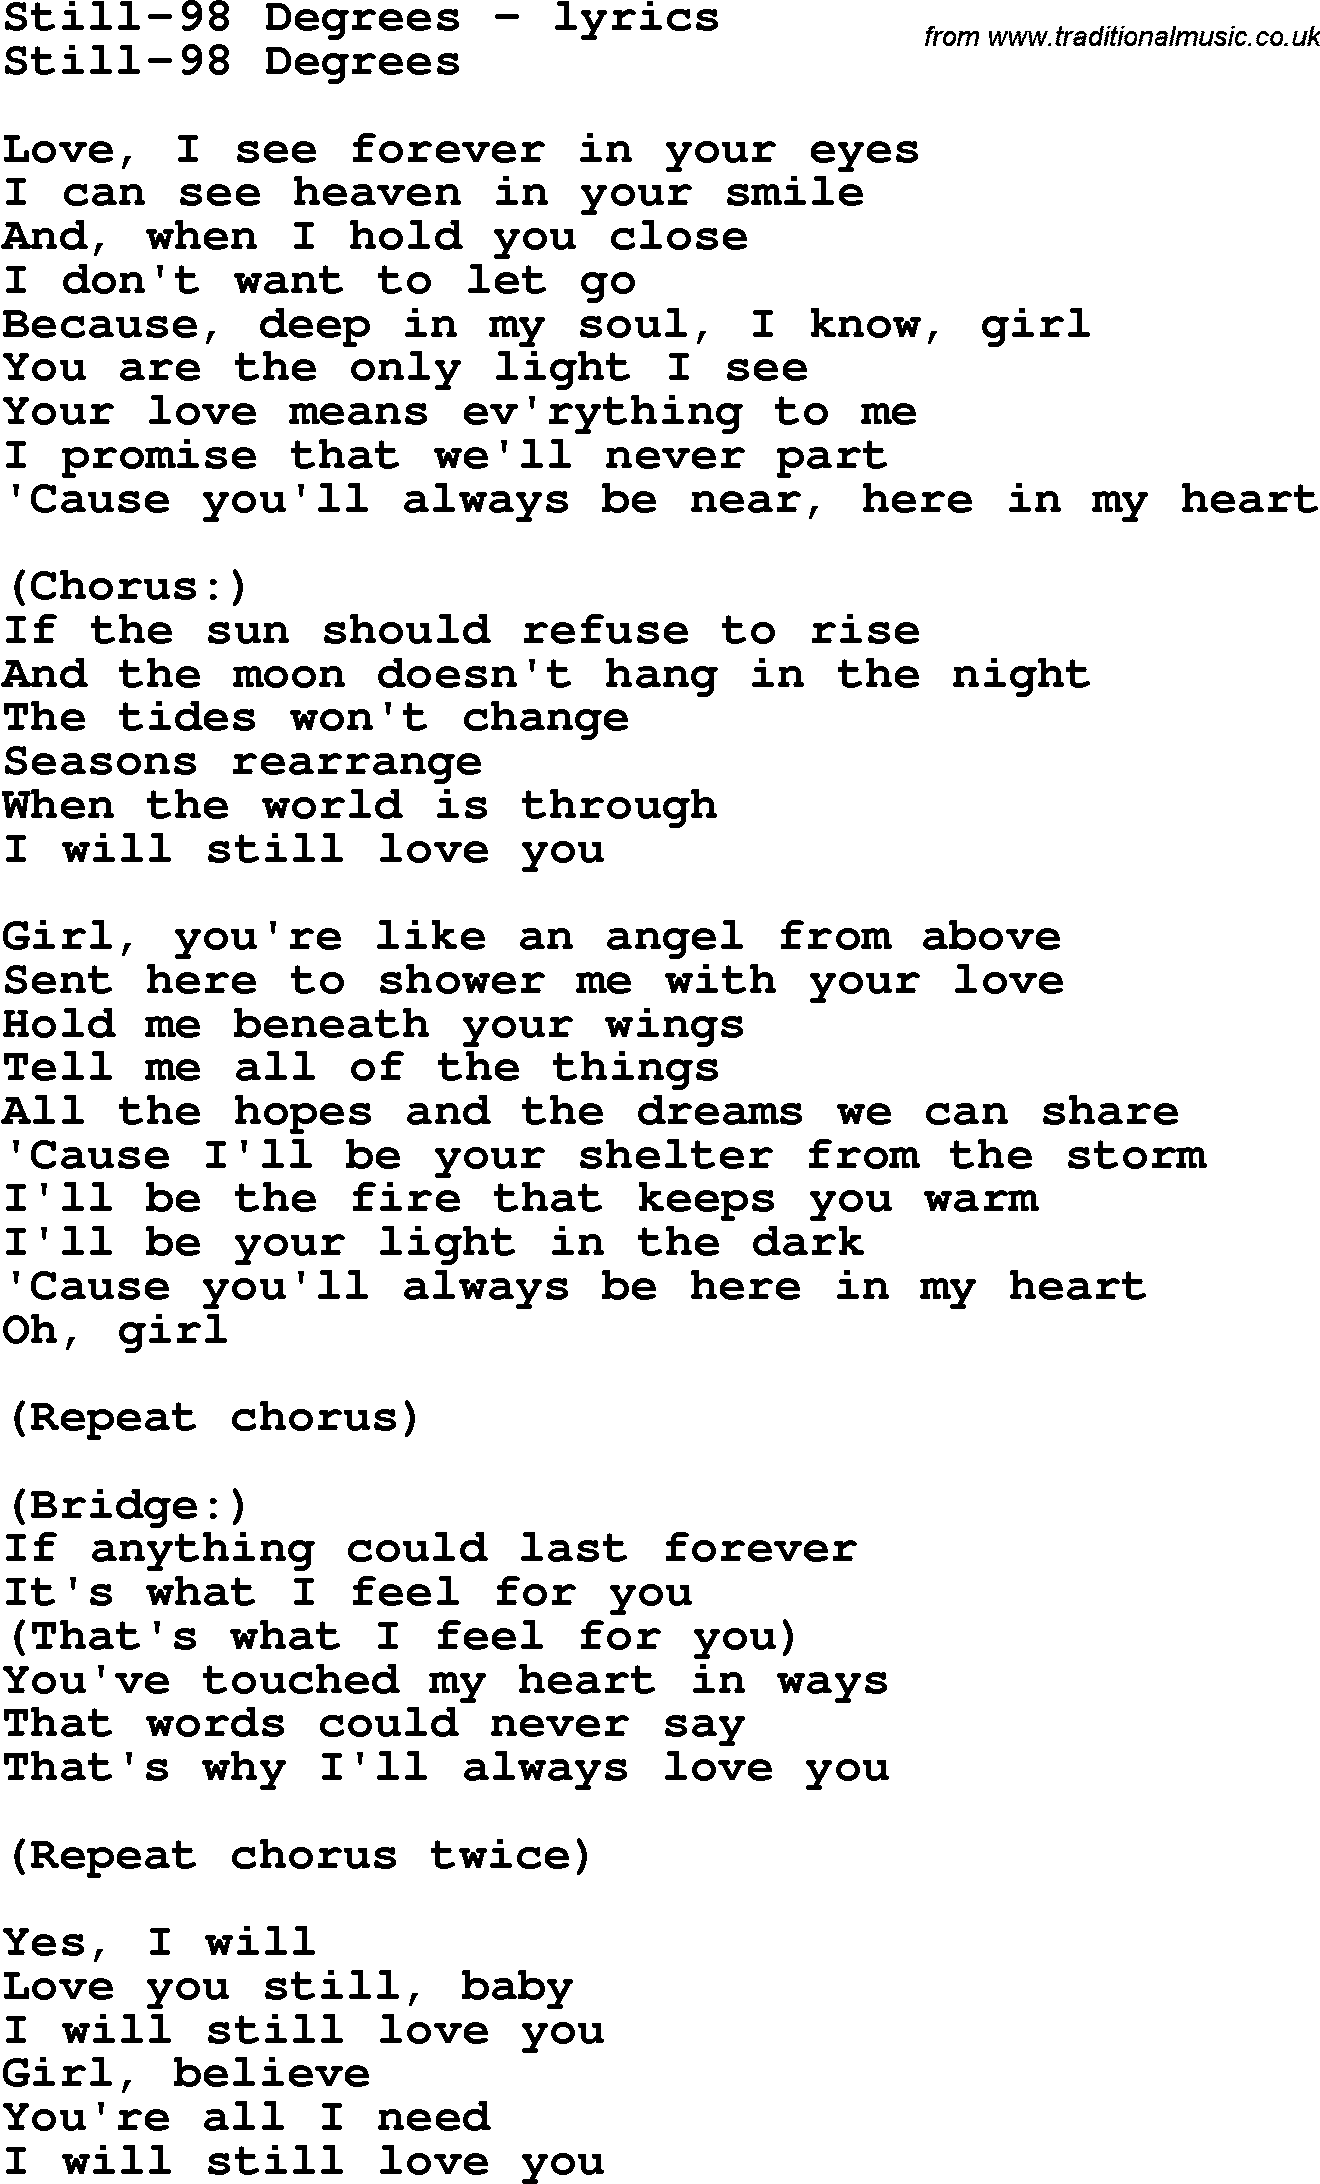 Love Song Lyrics for: Still-98 Degrees